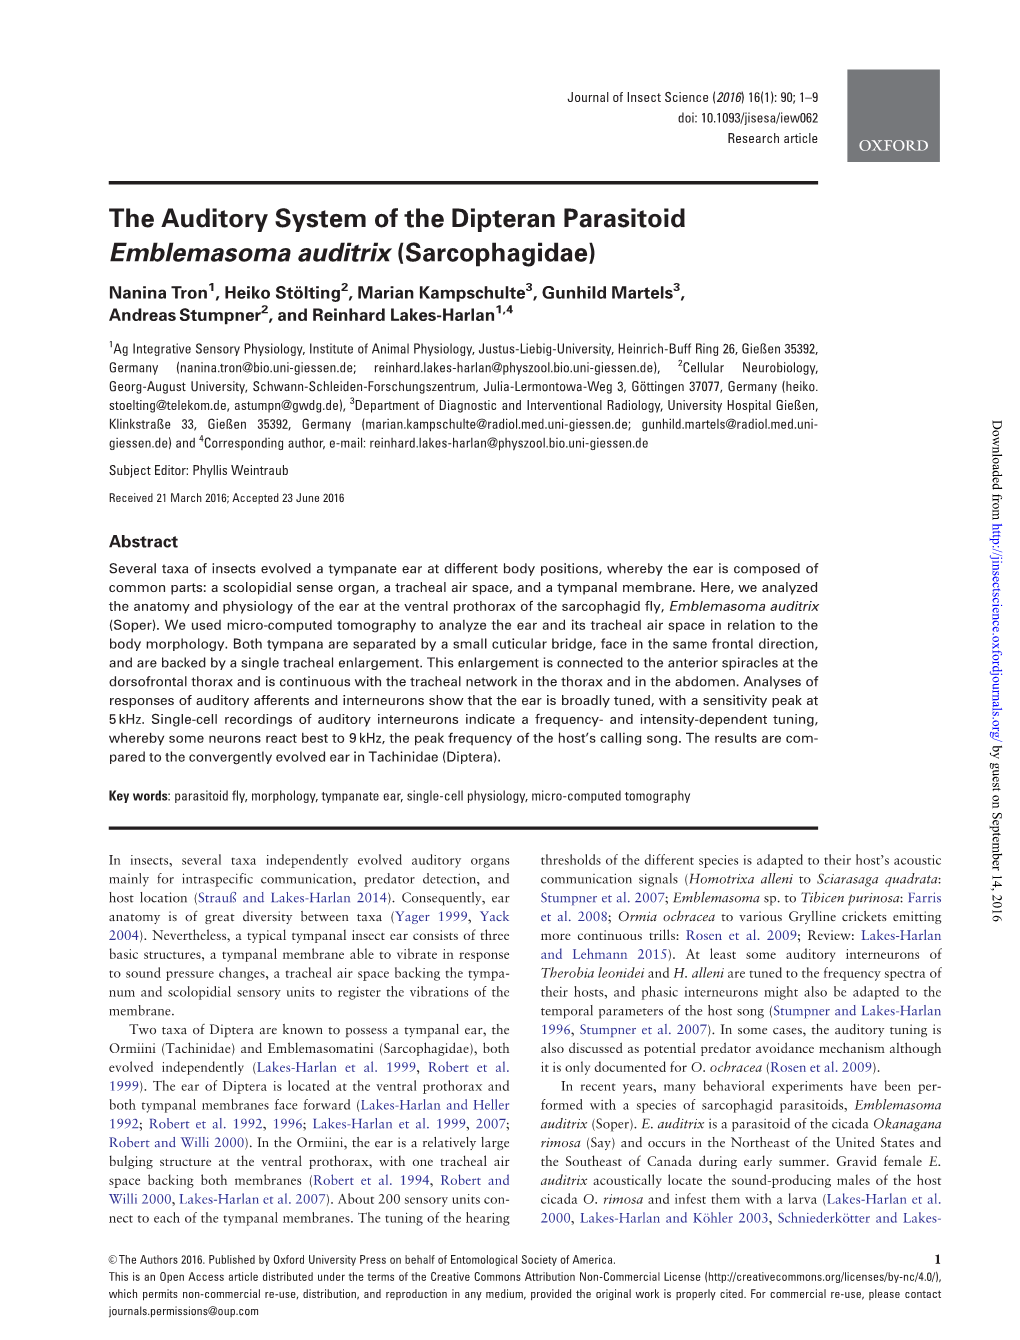 The Auditory System of the Dipteran Parasitoid Emblemasoma Auditrix (Sarcophagidae)